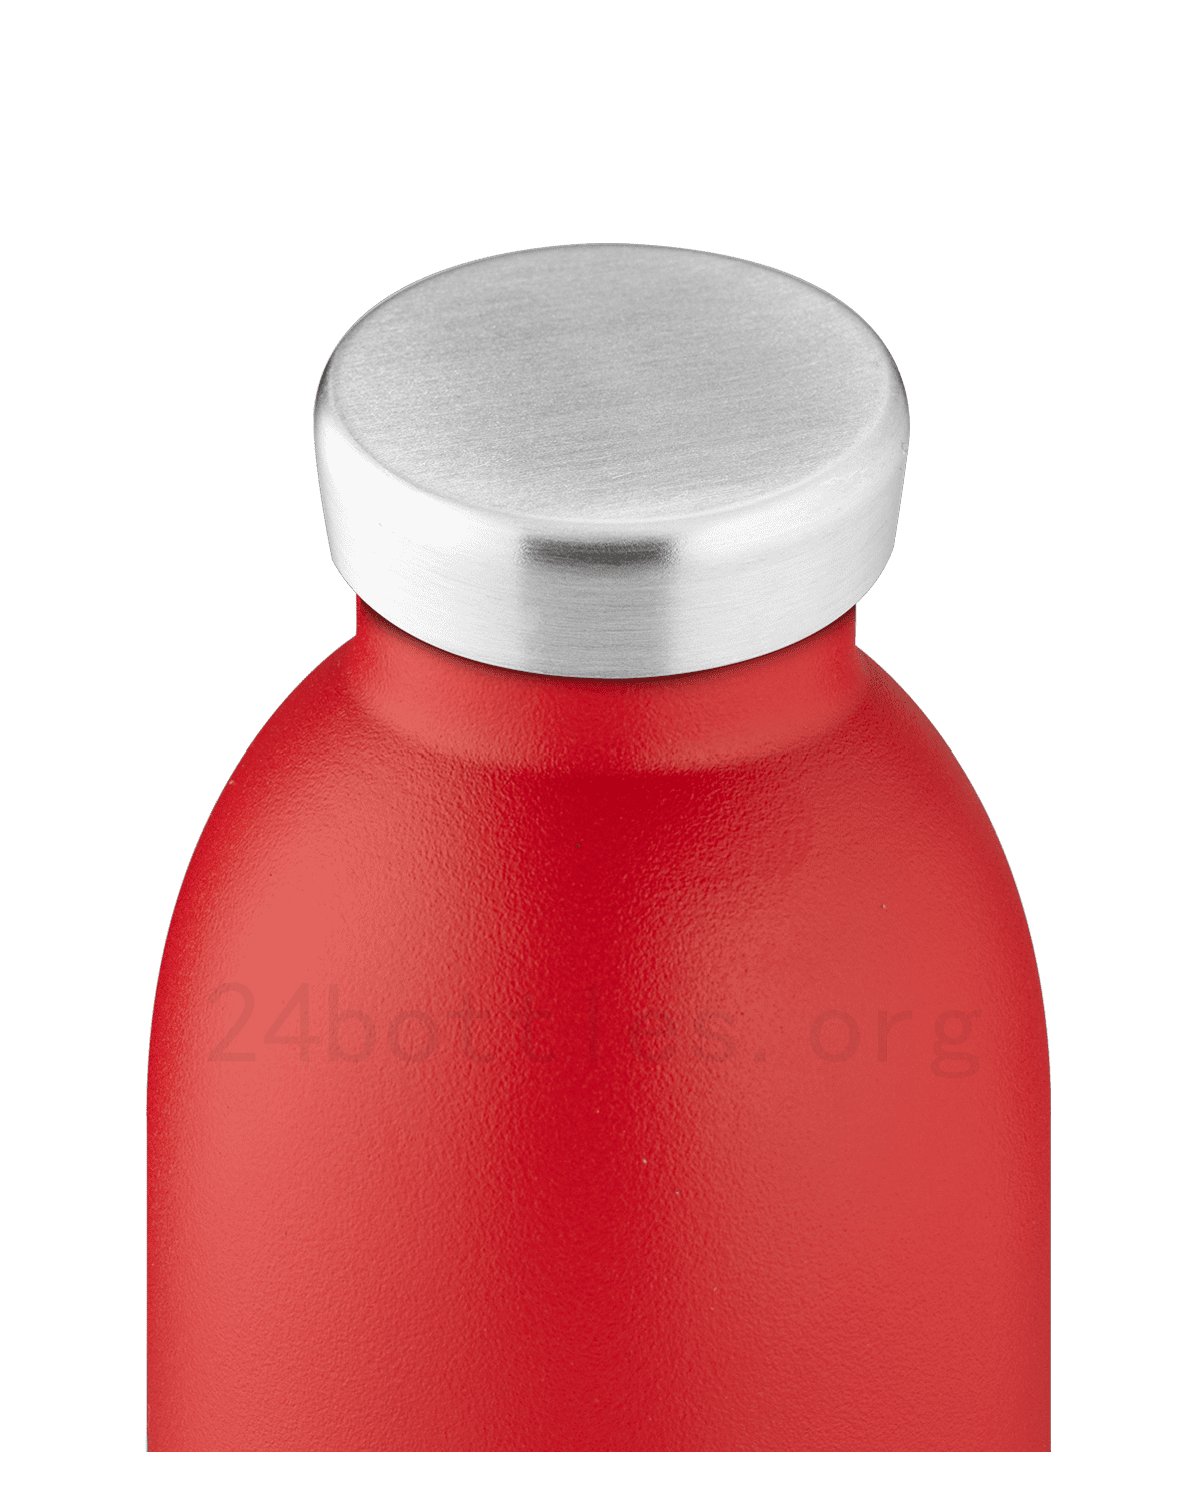 borraccia termica 24 bottles Hot Red - 330 ml Saldi